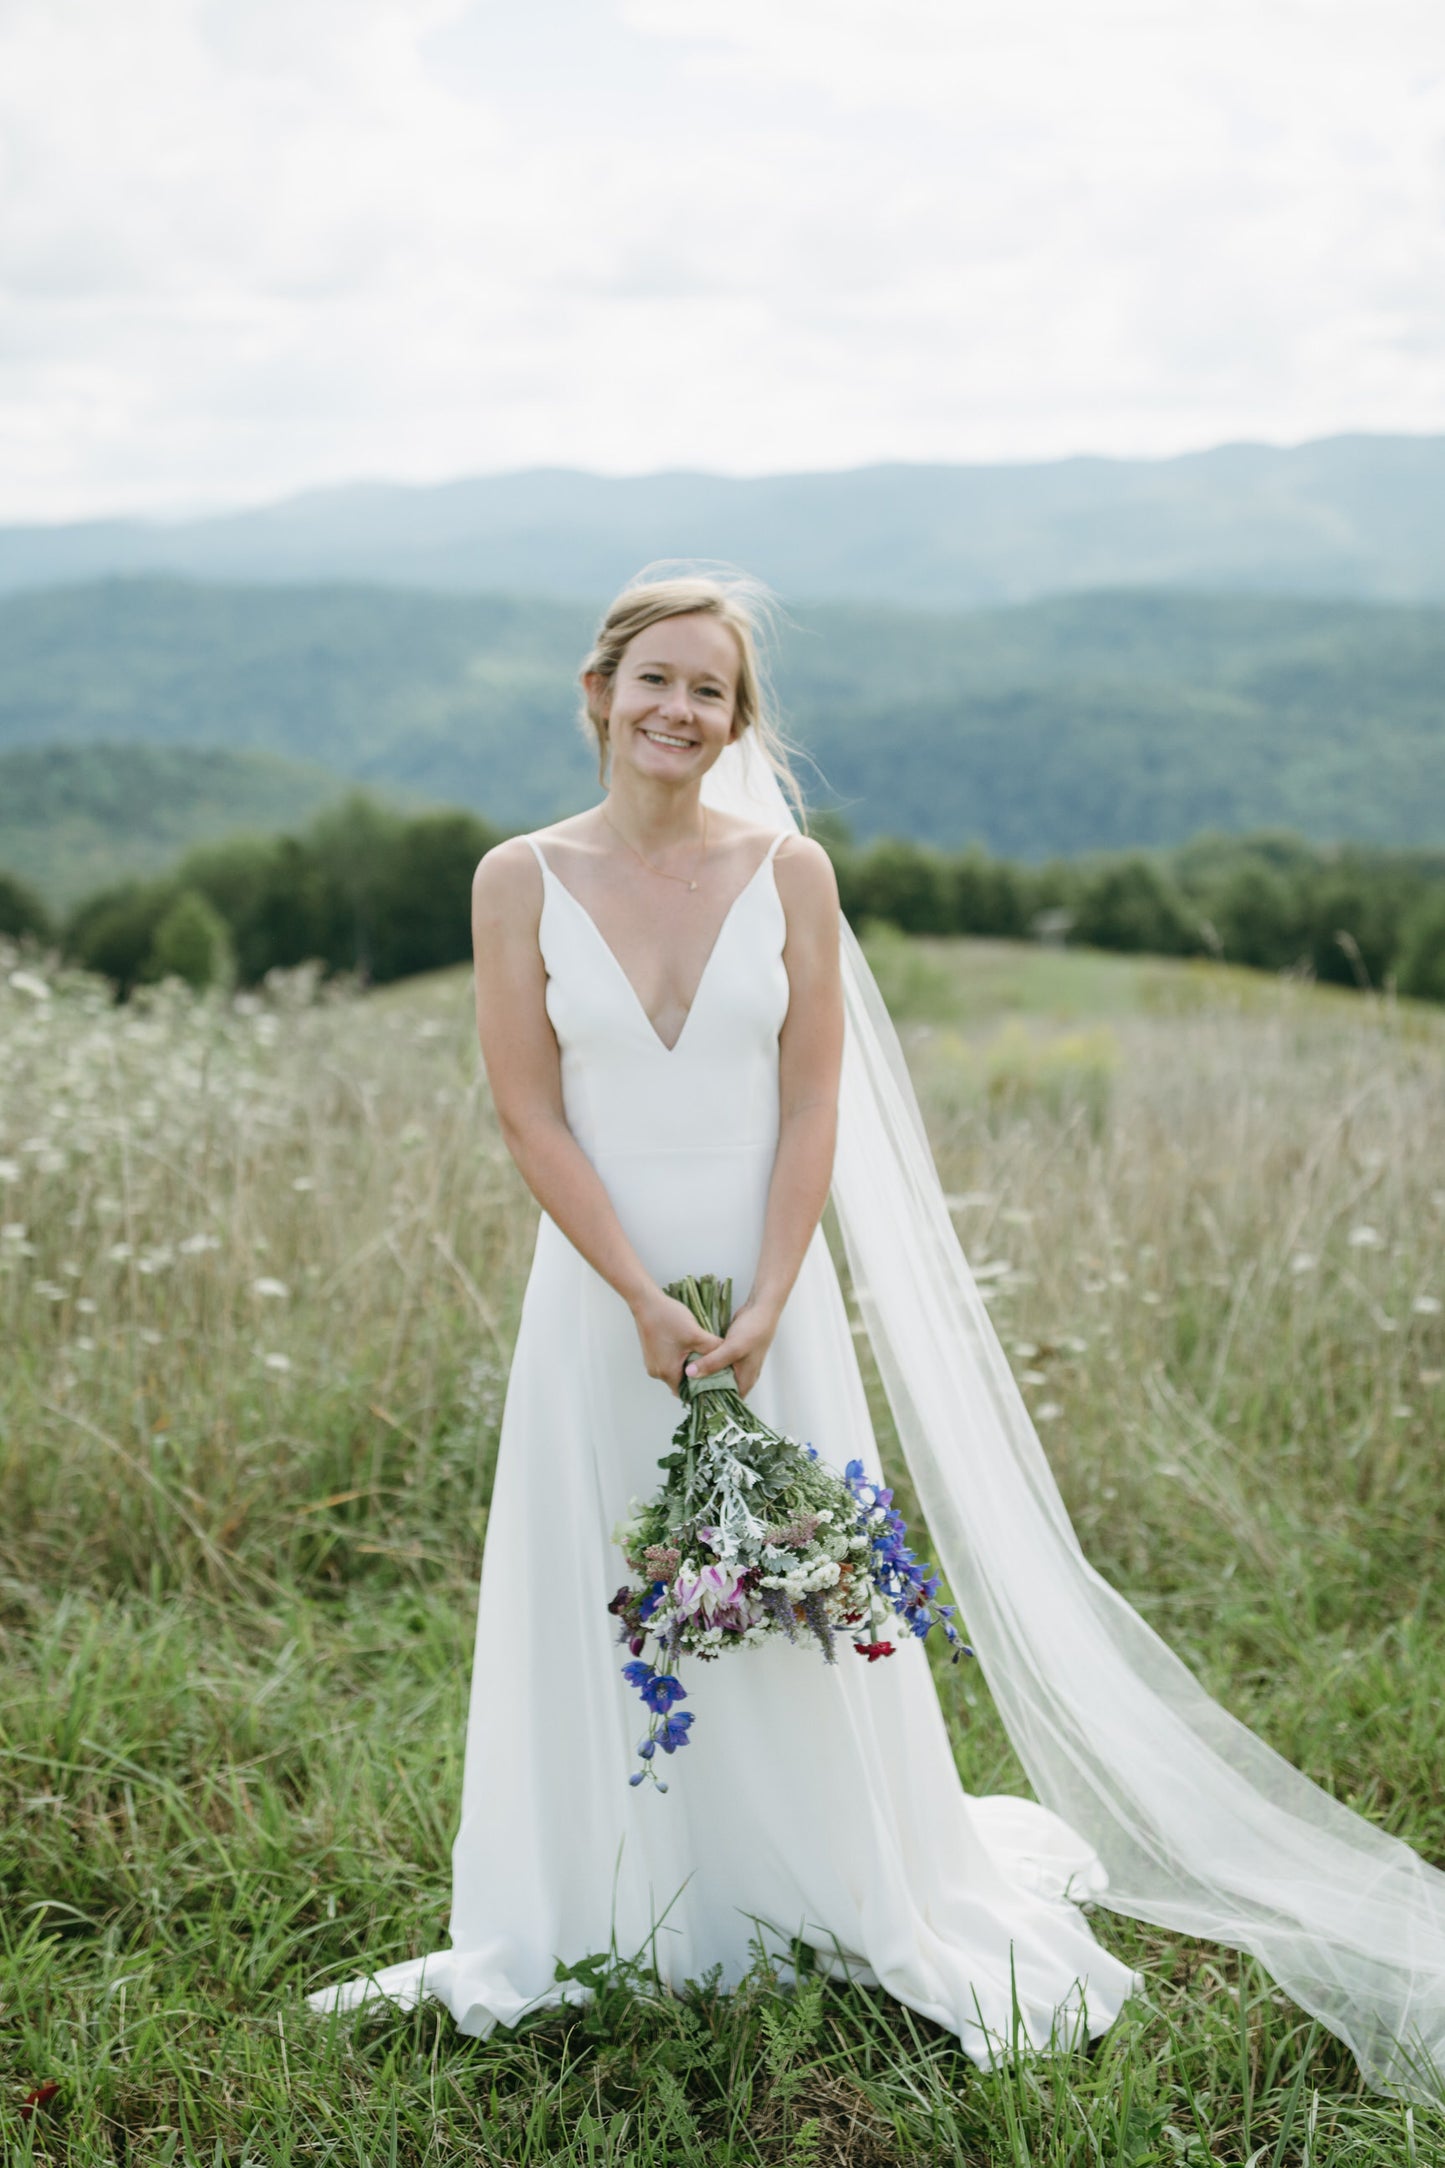 Chapel Length Wedding Veil, Simple Raw Edge Bridal Veil in White, Off White, Light Ivory